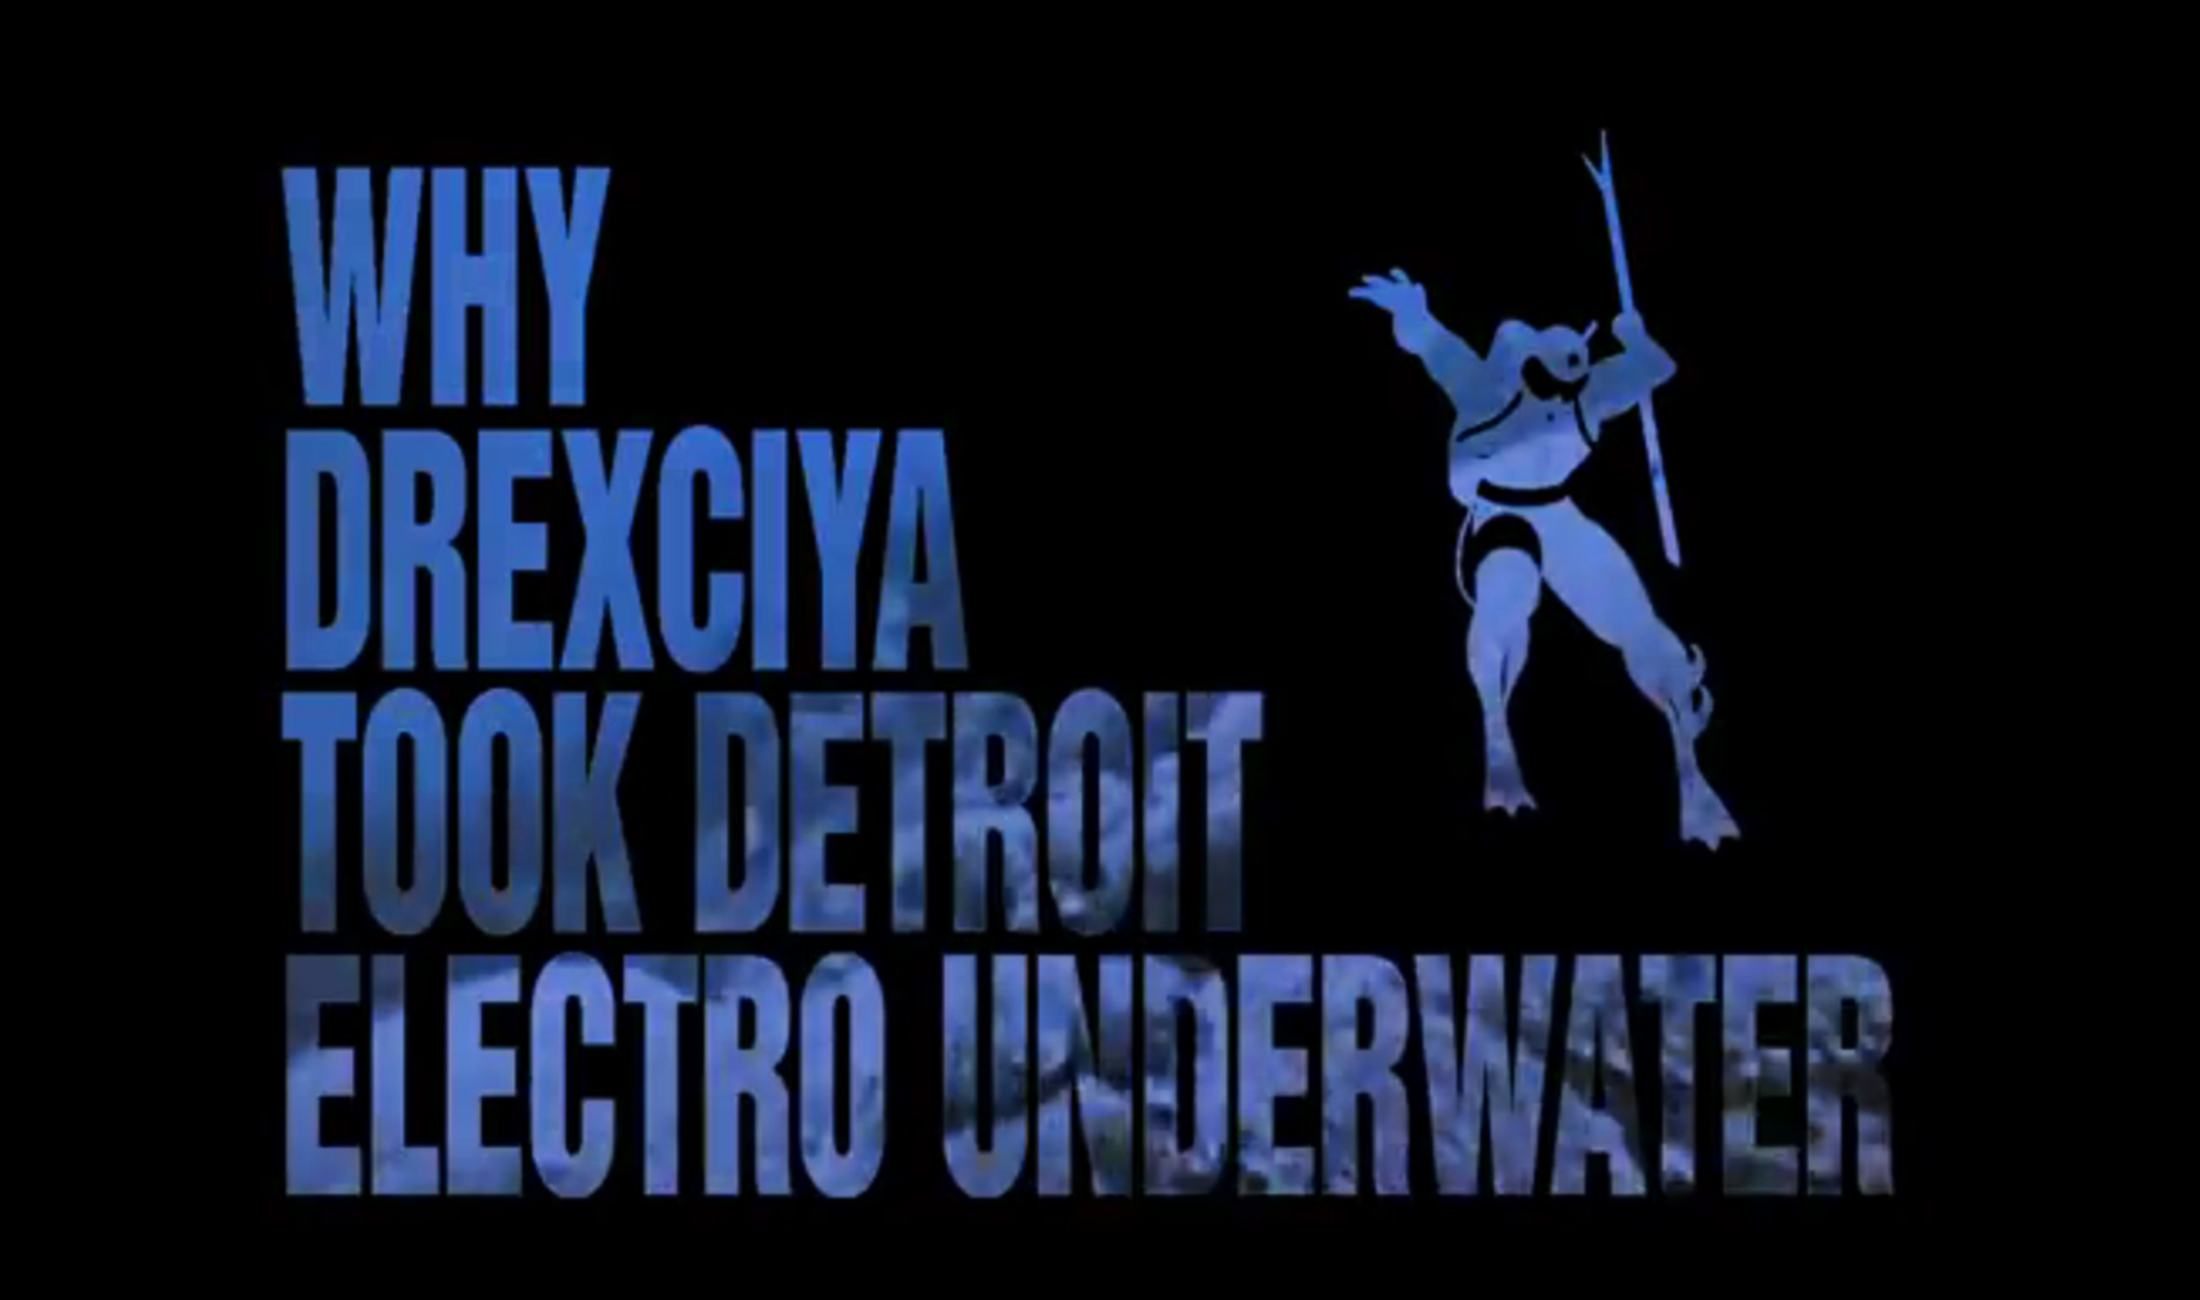 Video über Detroit Electro Duo Drexciya jetzt auf YouTube